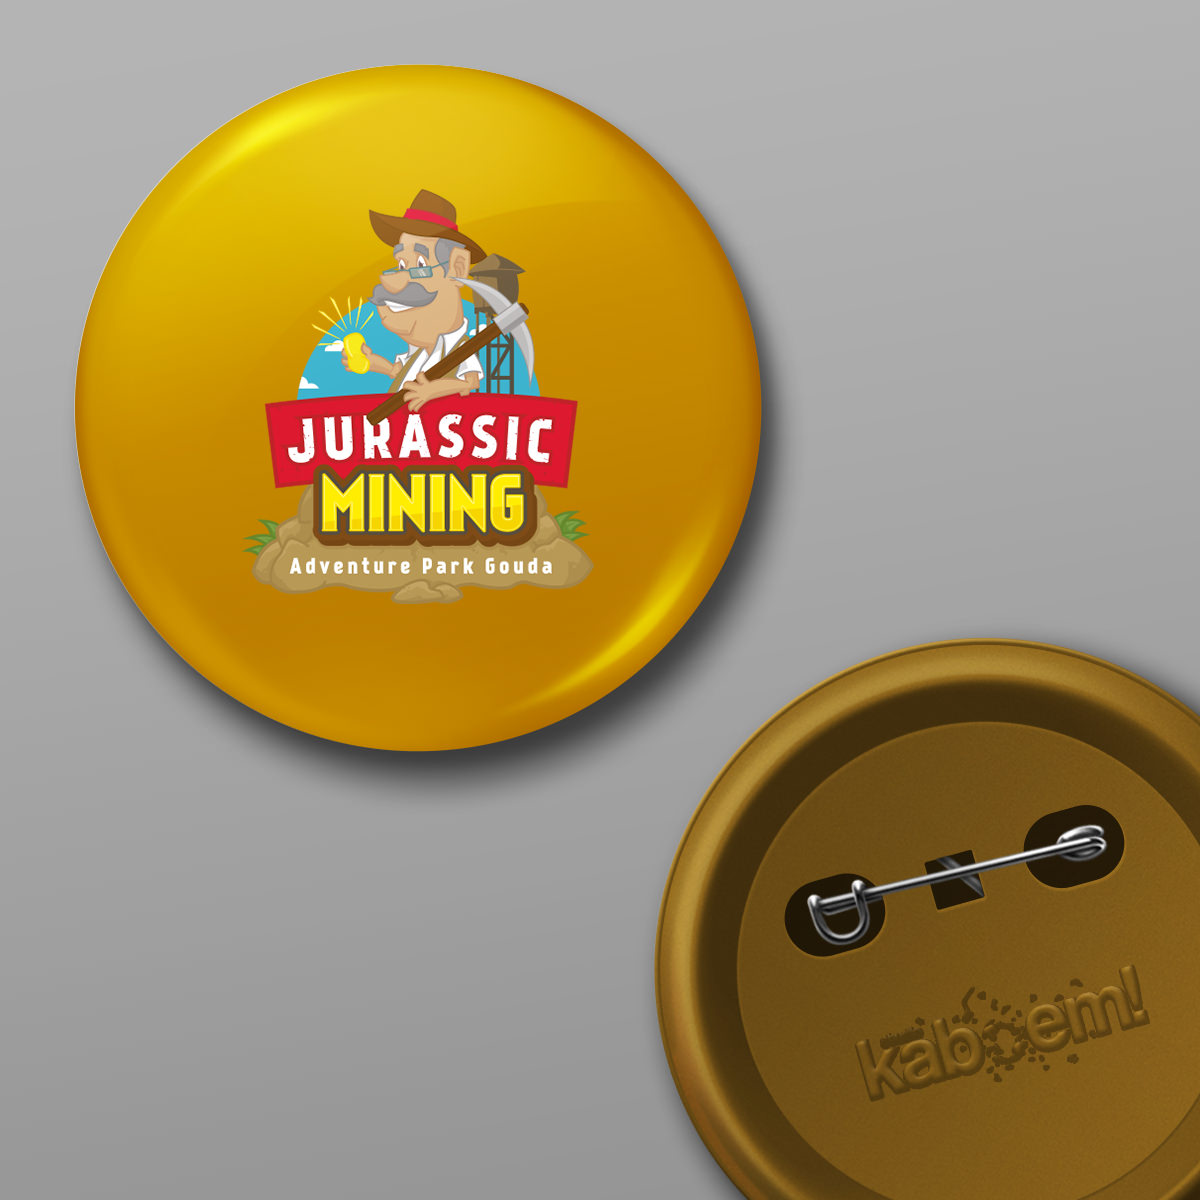 Jurassic Mining logo Studio Kaboem!